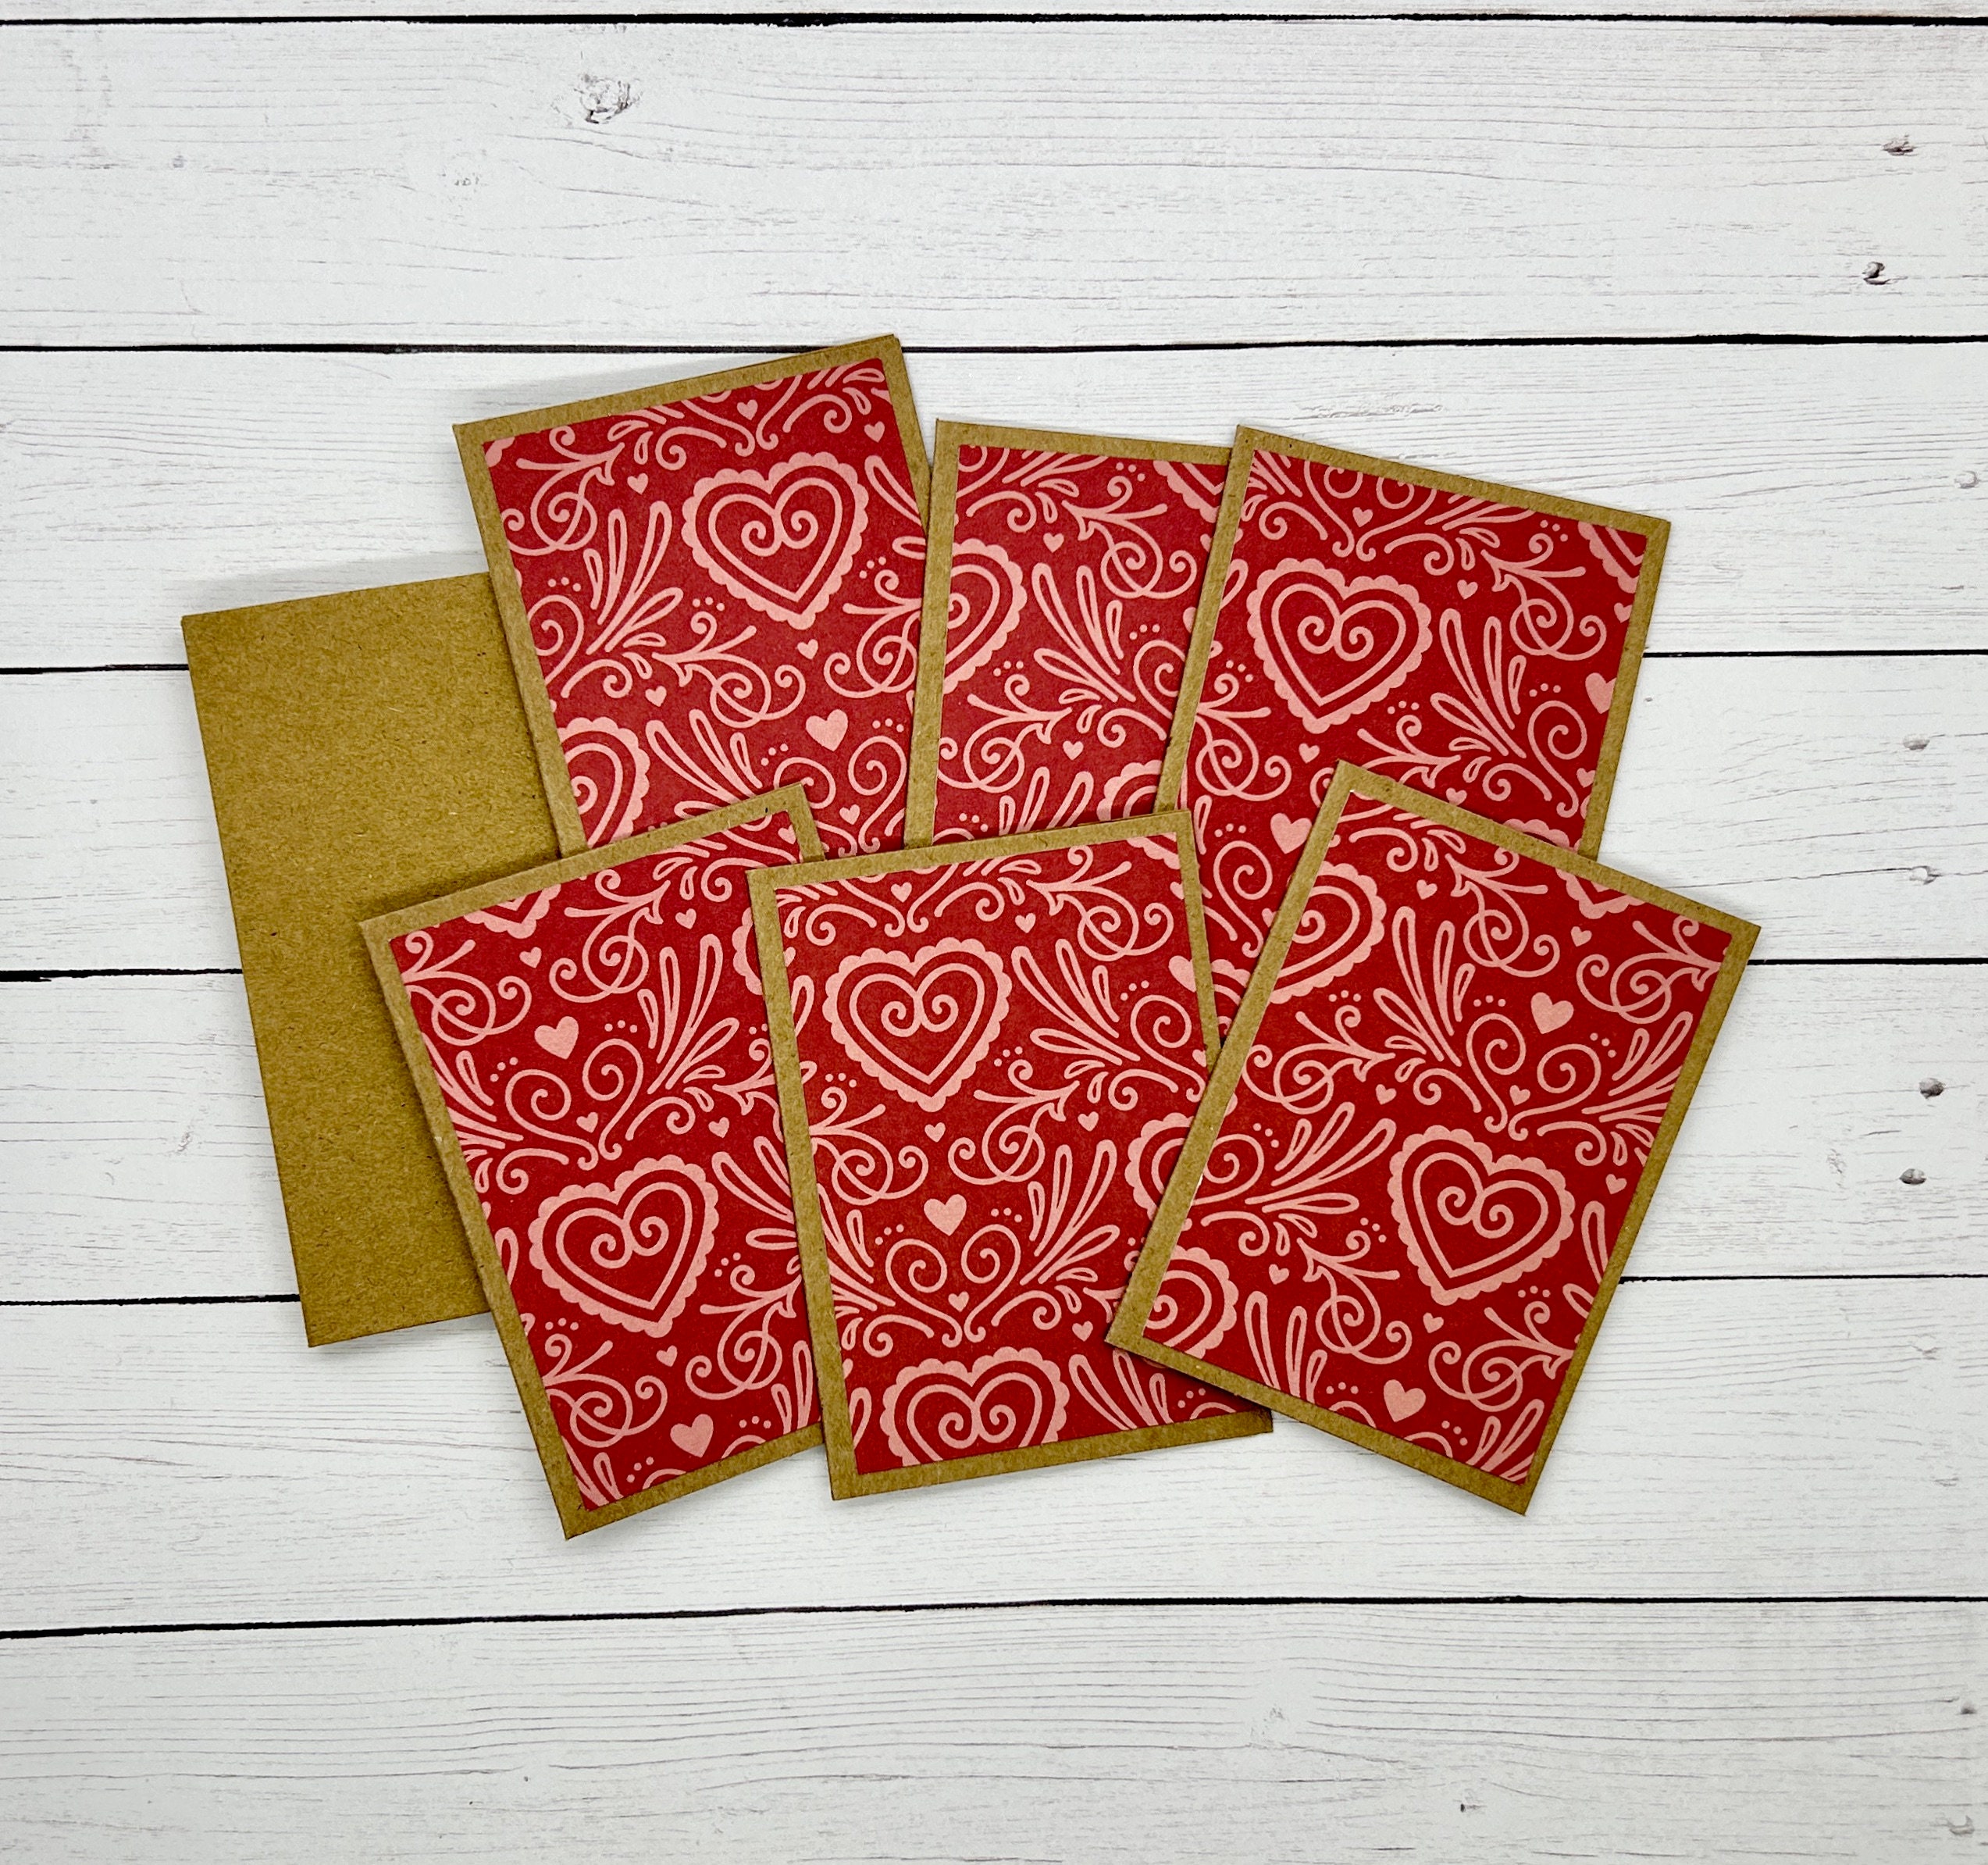 Plaid Heart Card Assortment, Set of 6 Heart Cards, Love Cards 